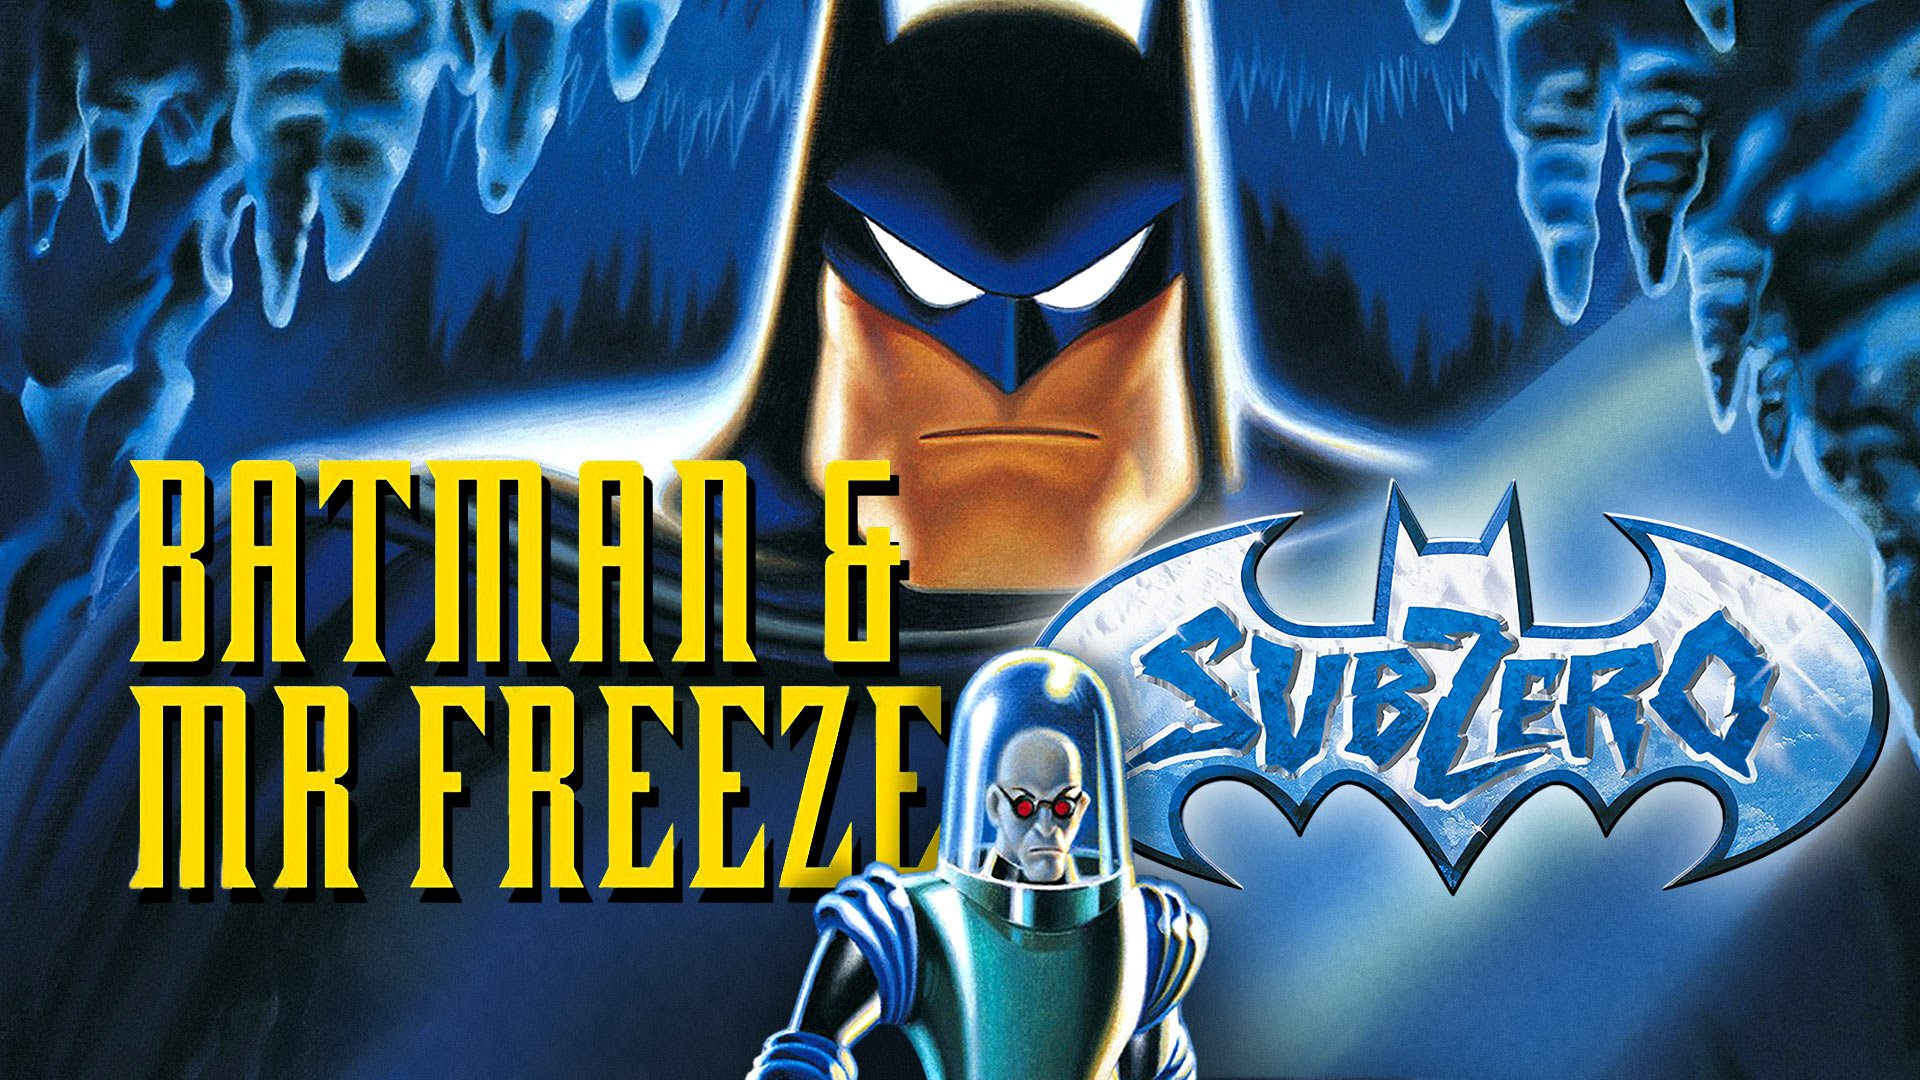 Batman Mr Freeze Subzero Hd Wallpaper Background Image 1920x1080 Id 1117268 Wallpaper Abyss